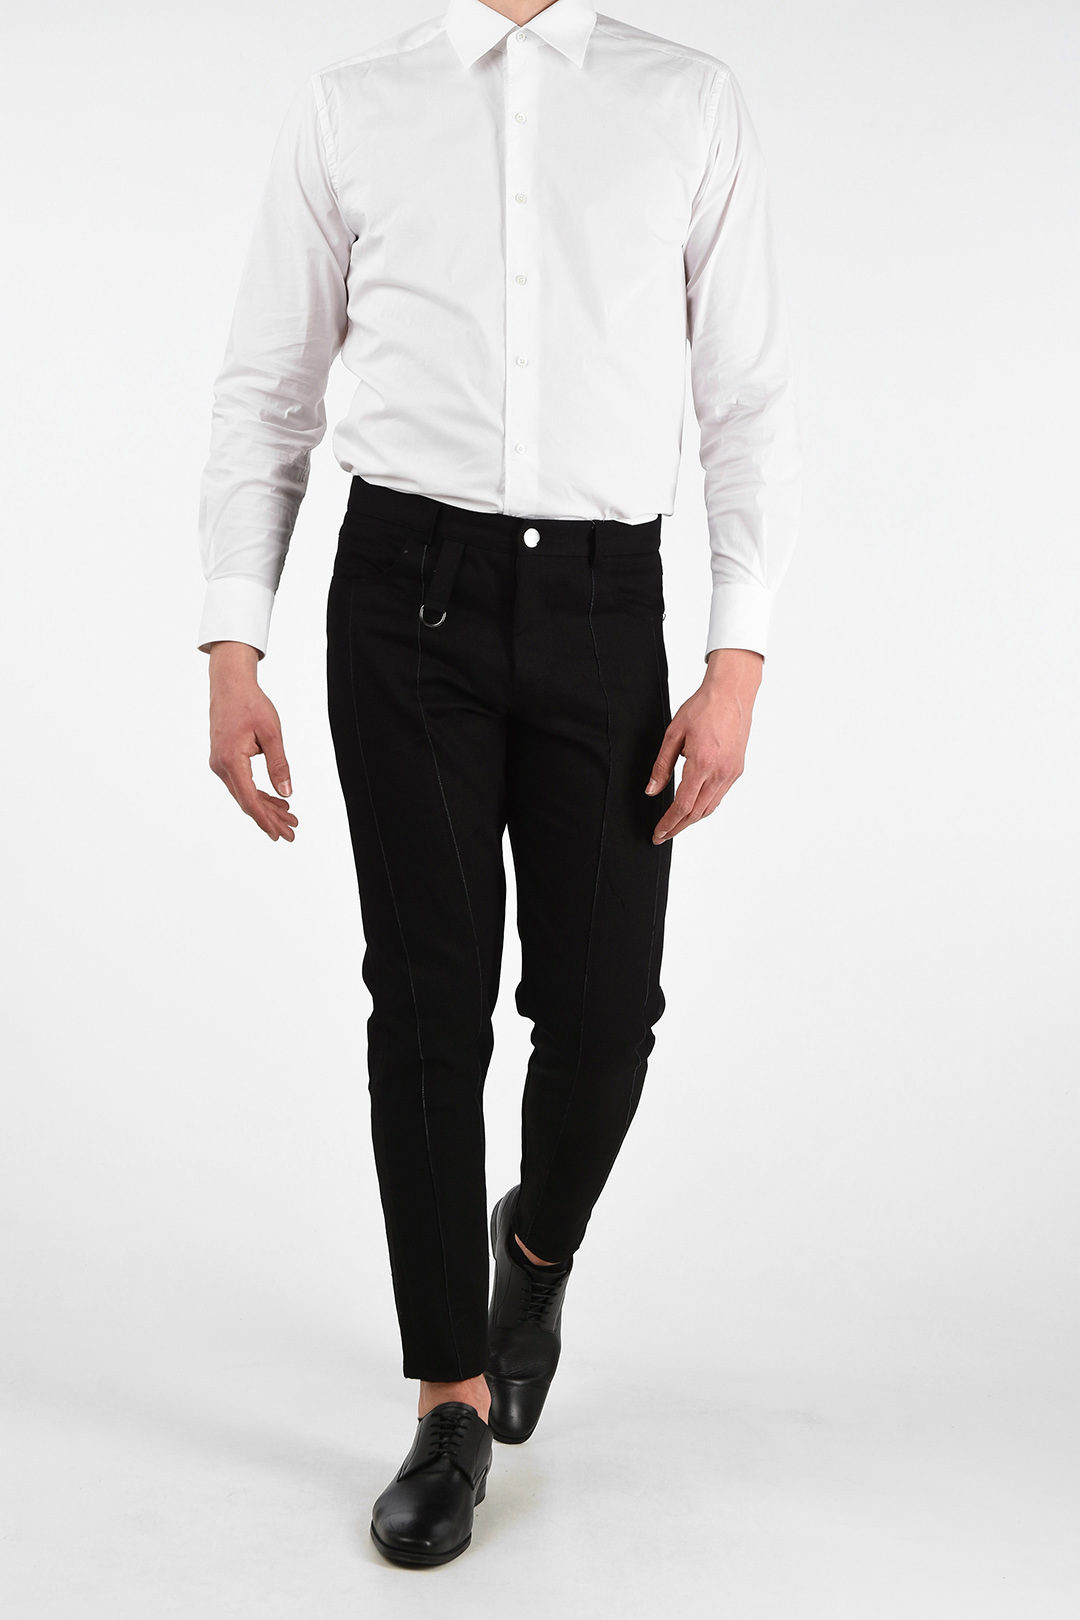 Men's Slim Fit Urban Straight Pencil Casual Trousers Leg Pants Cargo Jogger  * | eBay